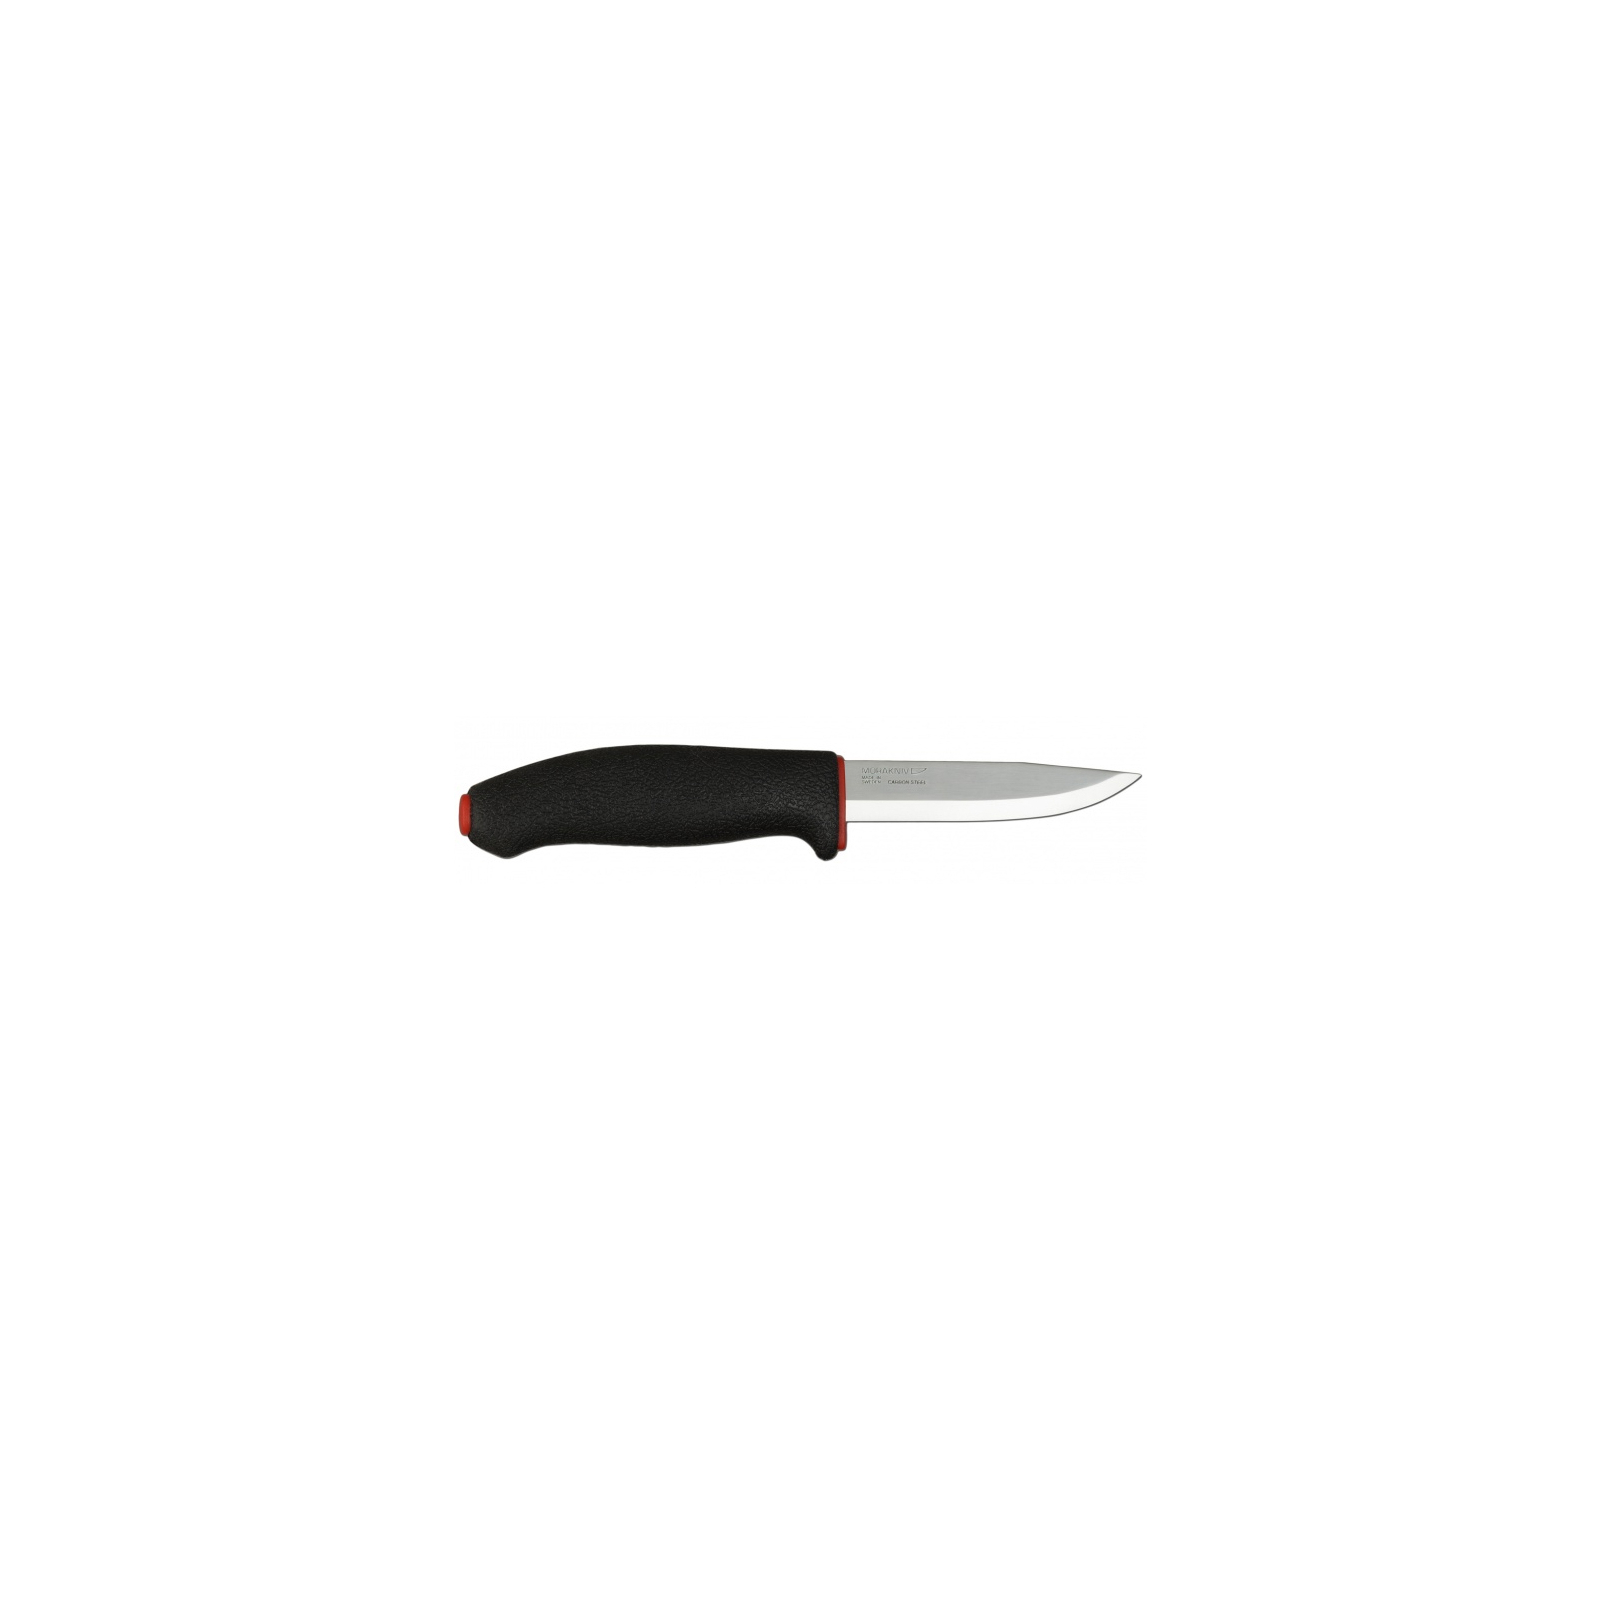 Нож Morakniv 711 carbon steel (11481)